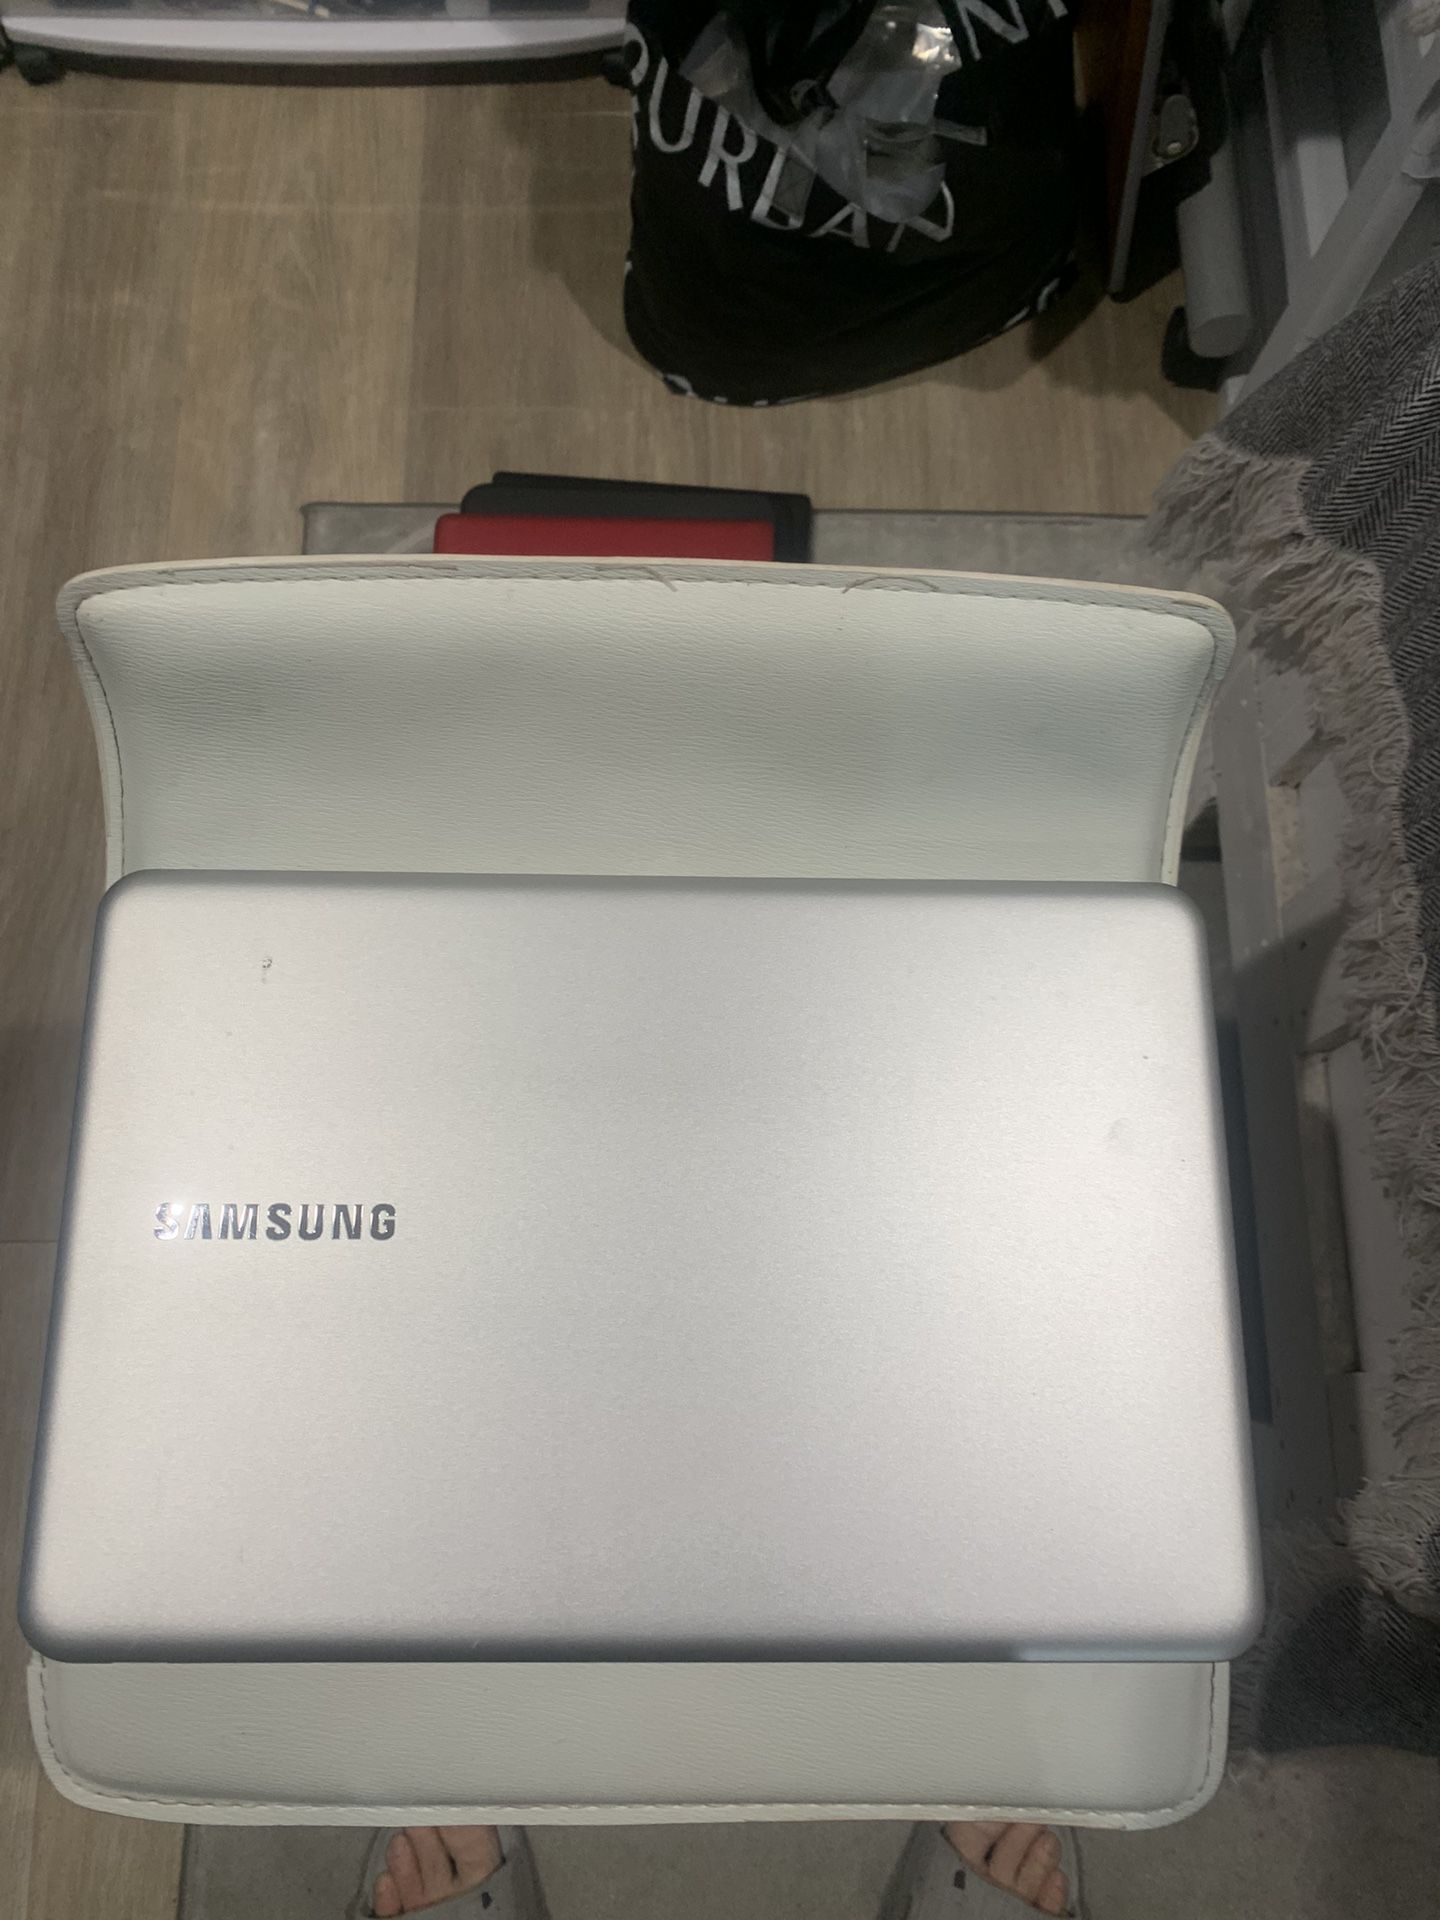 Samsung 15.6” Laptop #24047